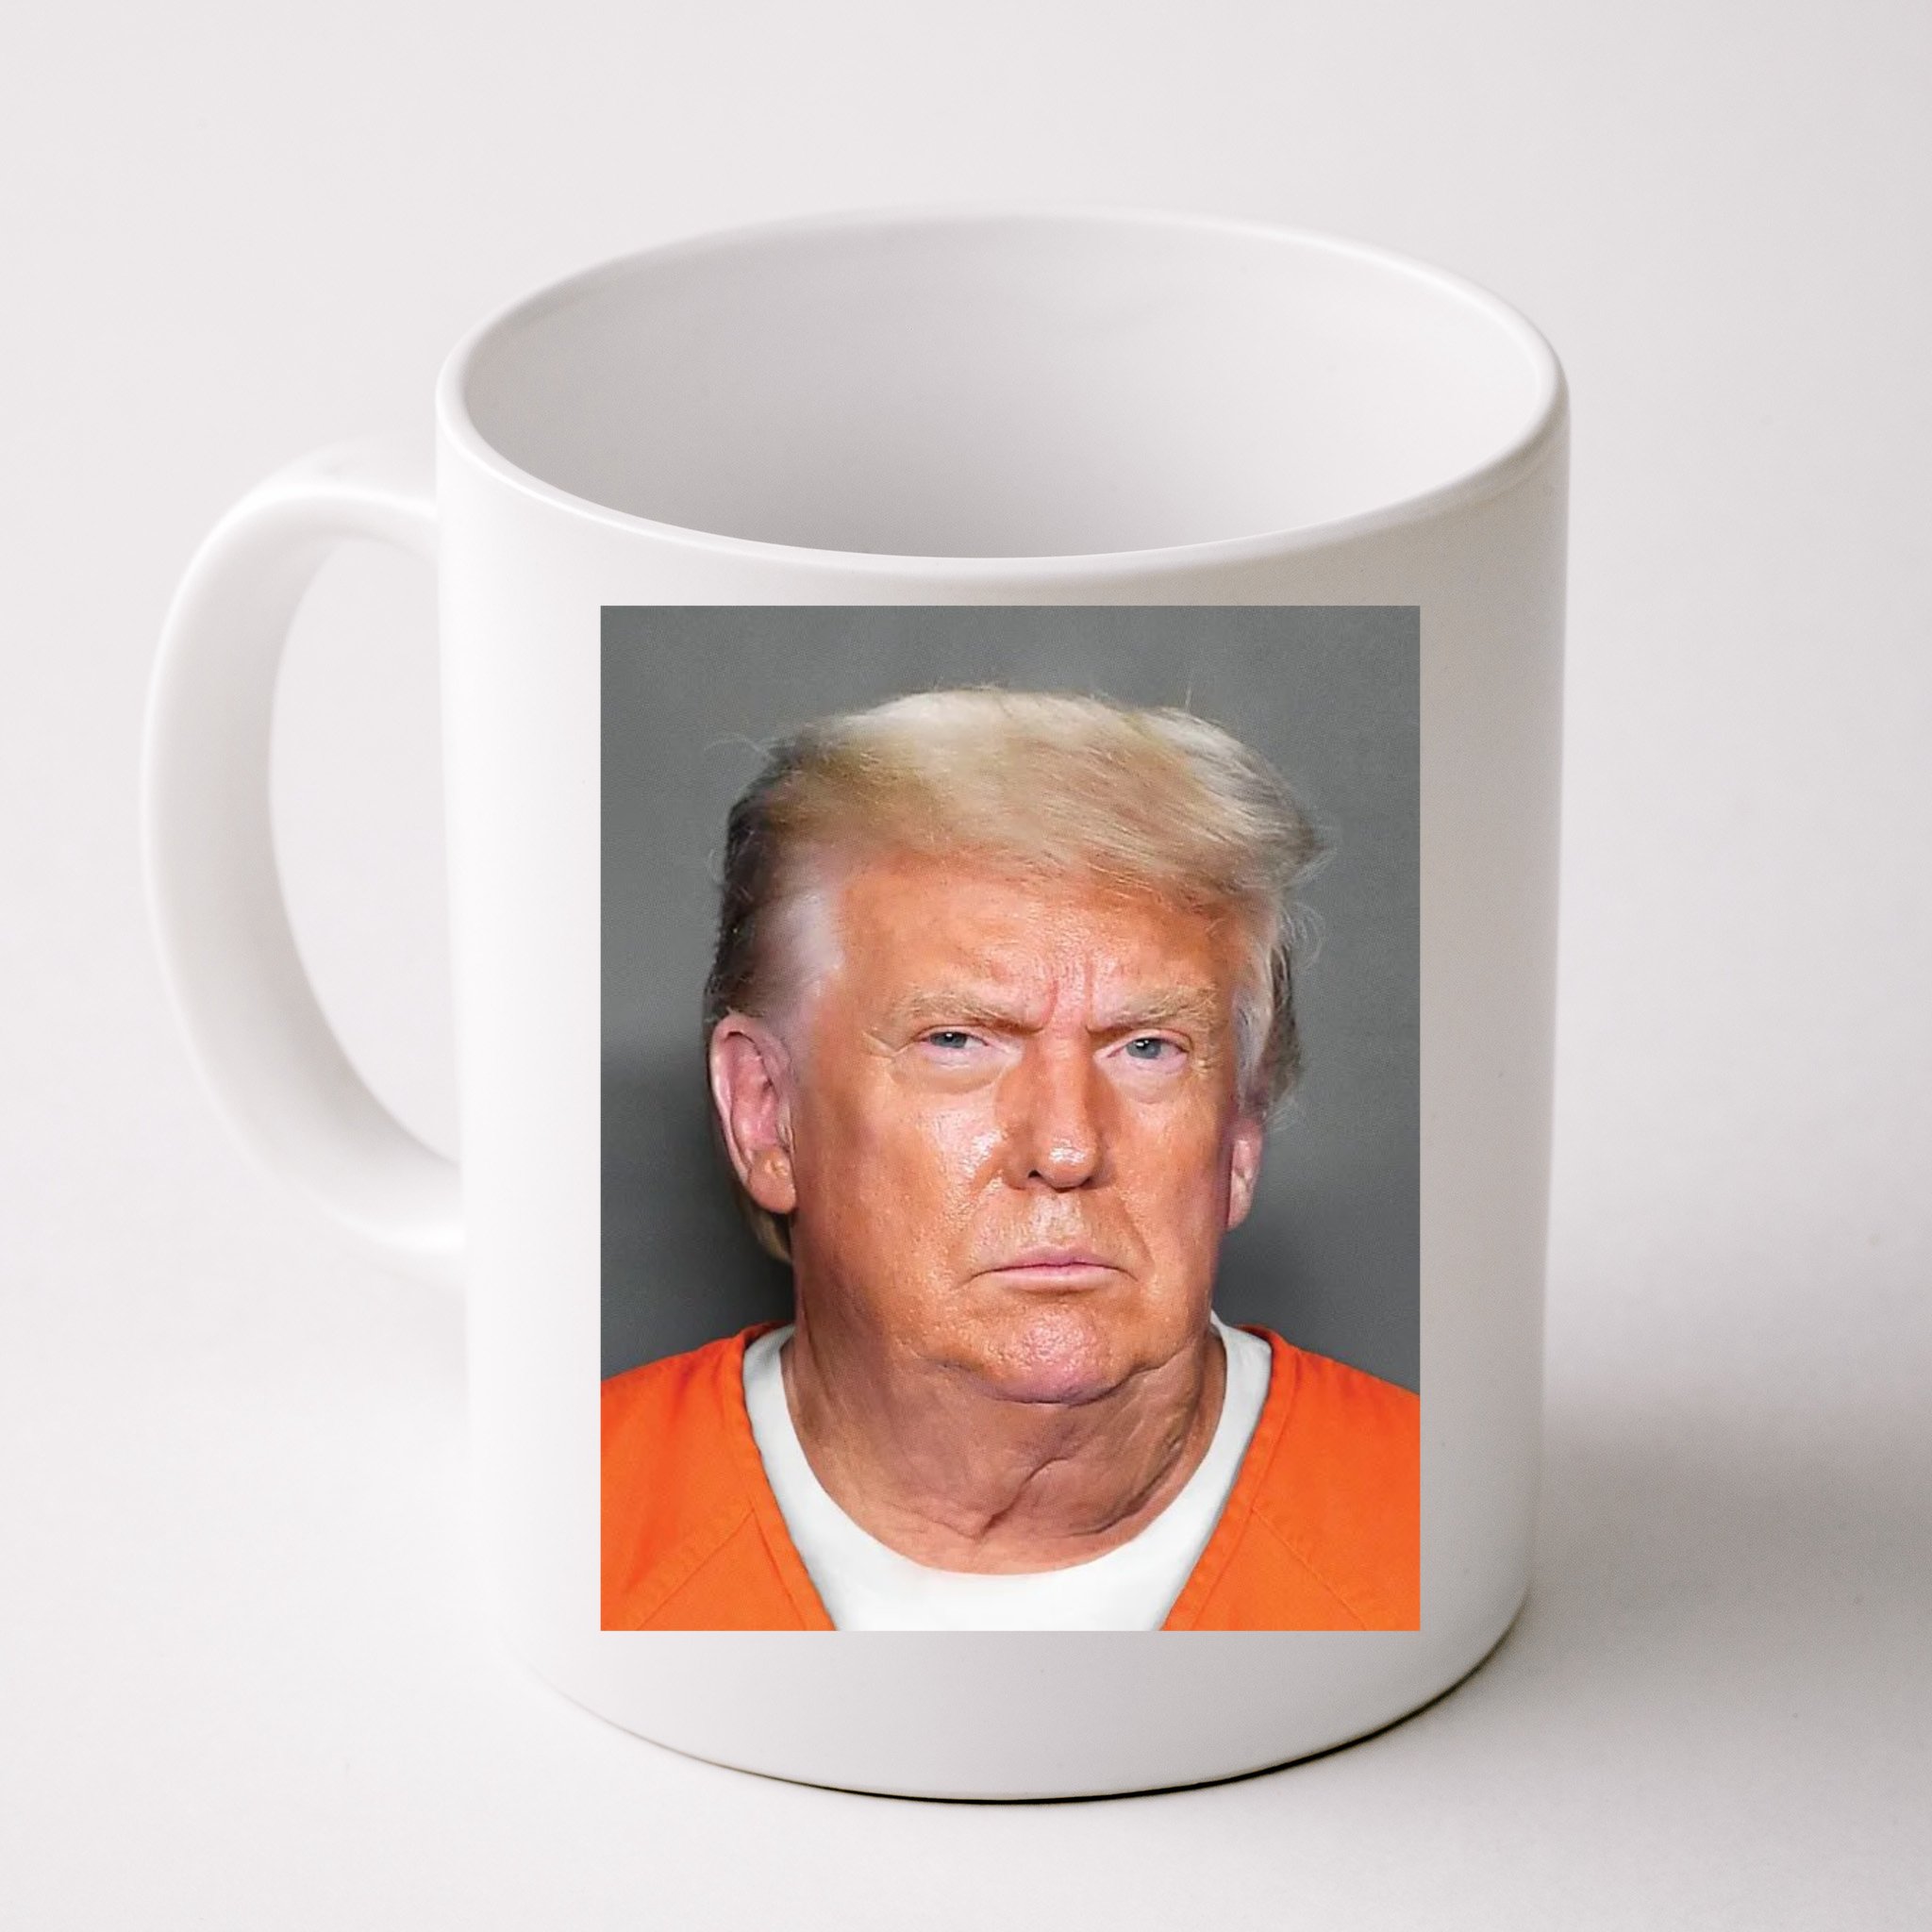 Bliss Monkey Co. Trump Mugshot - 11 Ounce Coffee Mug - Trump 2023 Jail  Mugshot - Coffee Cup